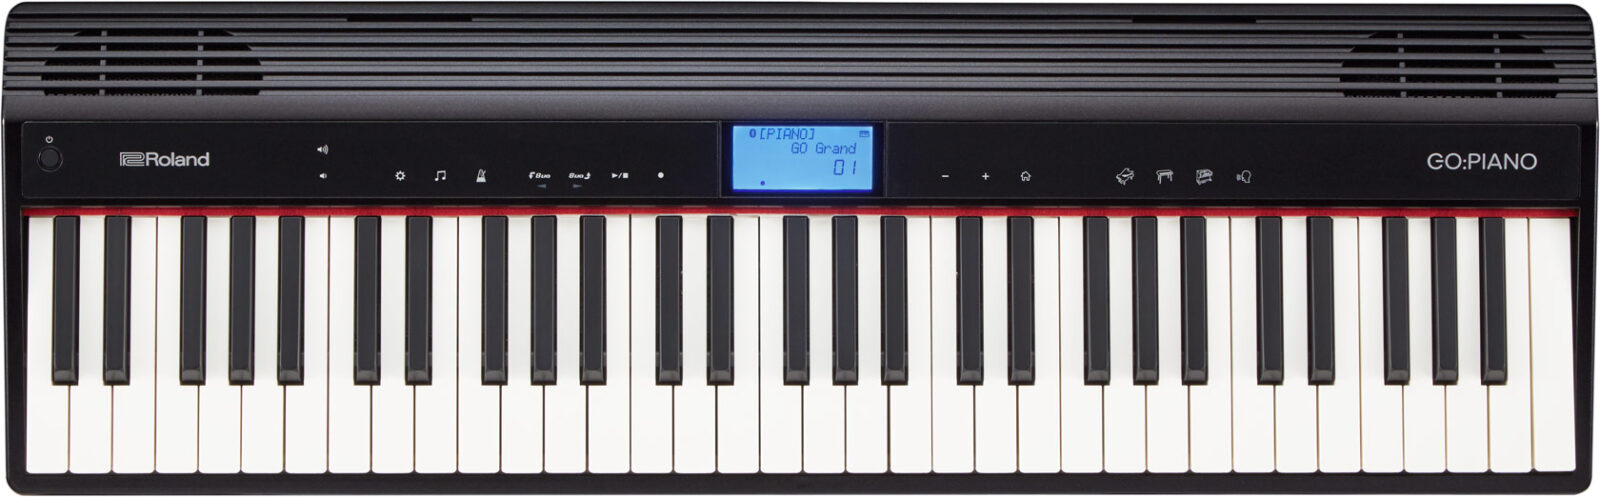 Piano Digital Roland Go-61p Go Piano MCXQualysom